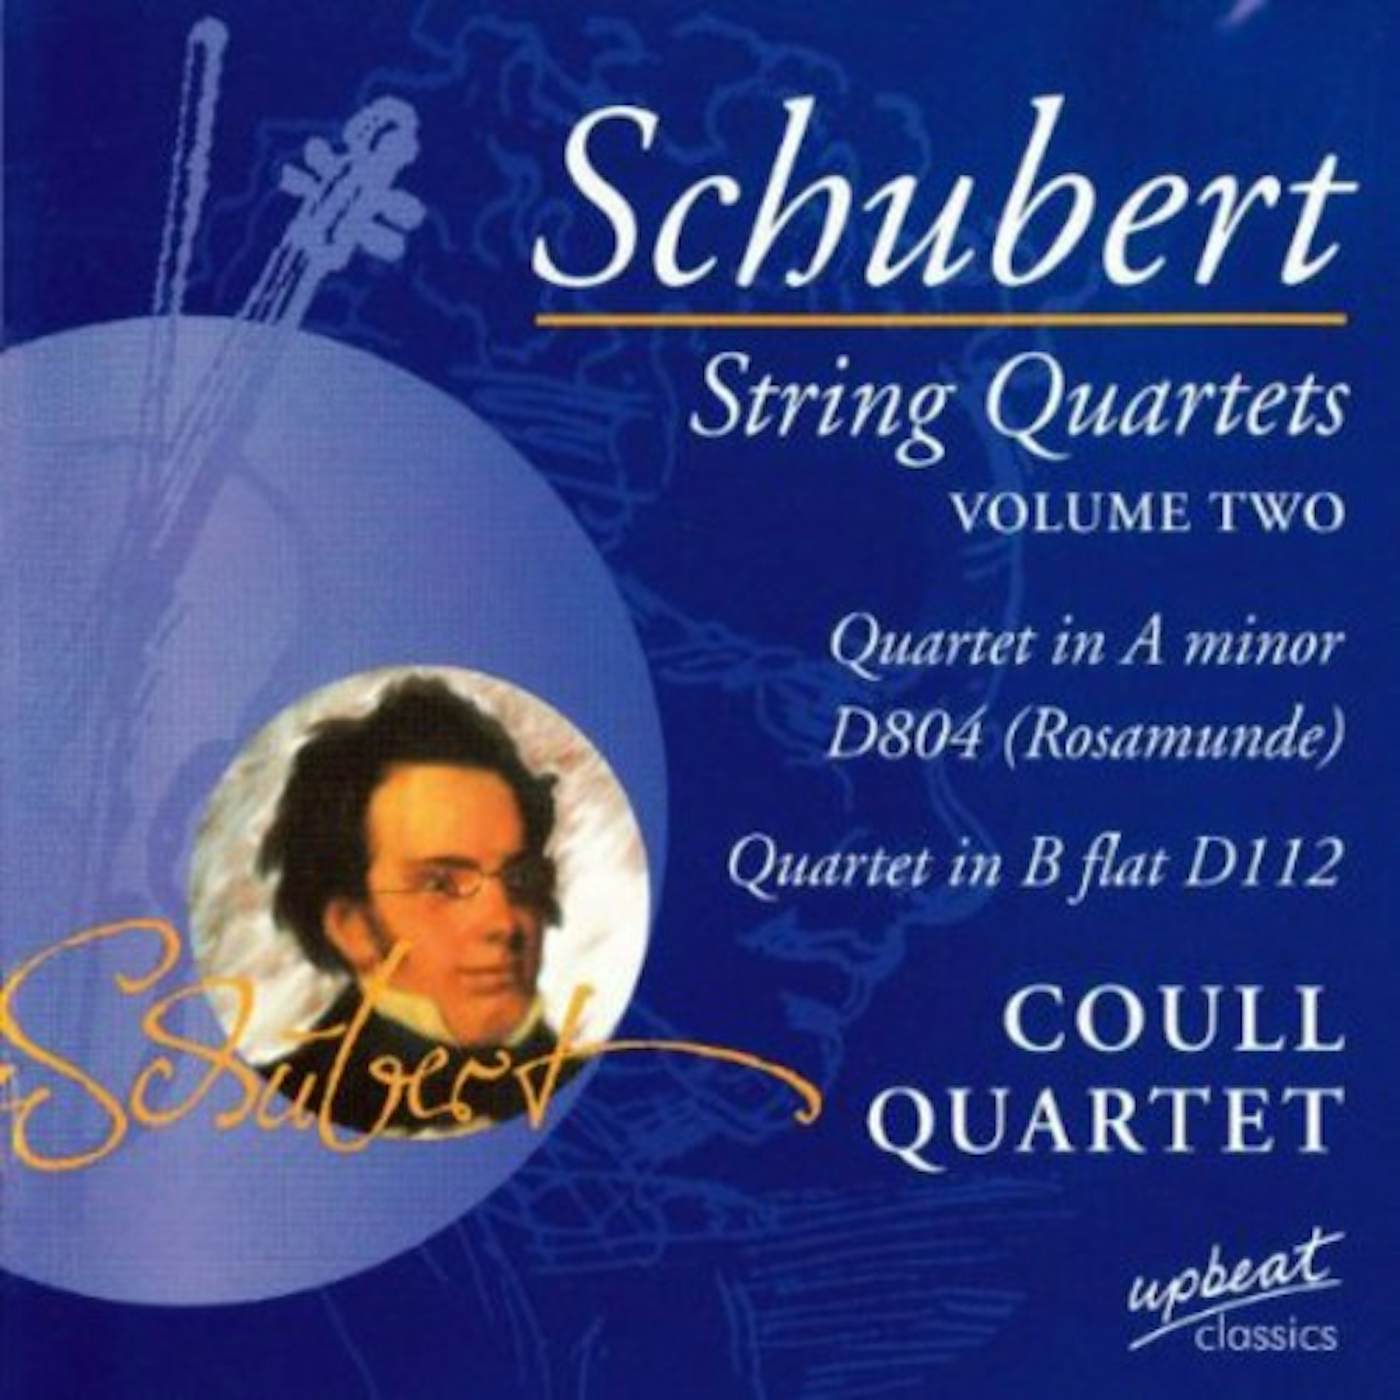 Franz Schubert: Il re degli elfi